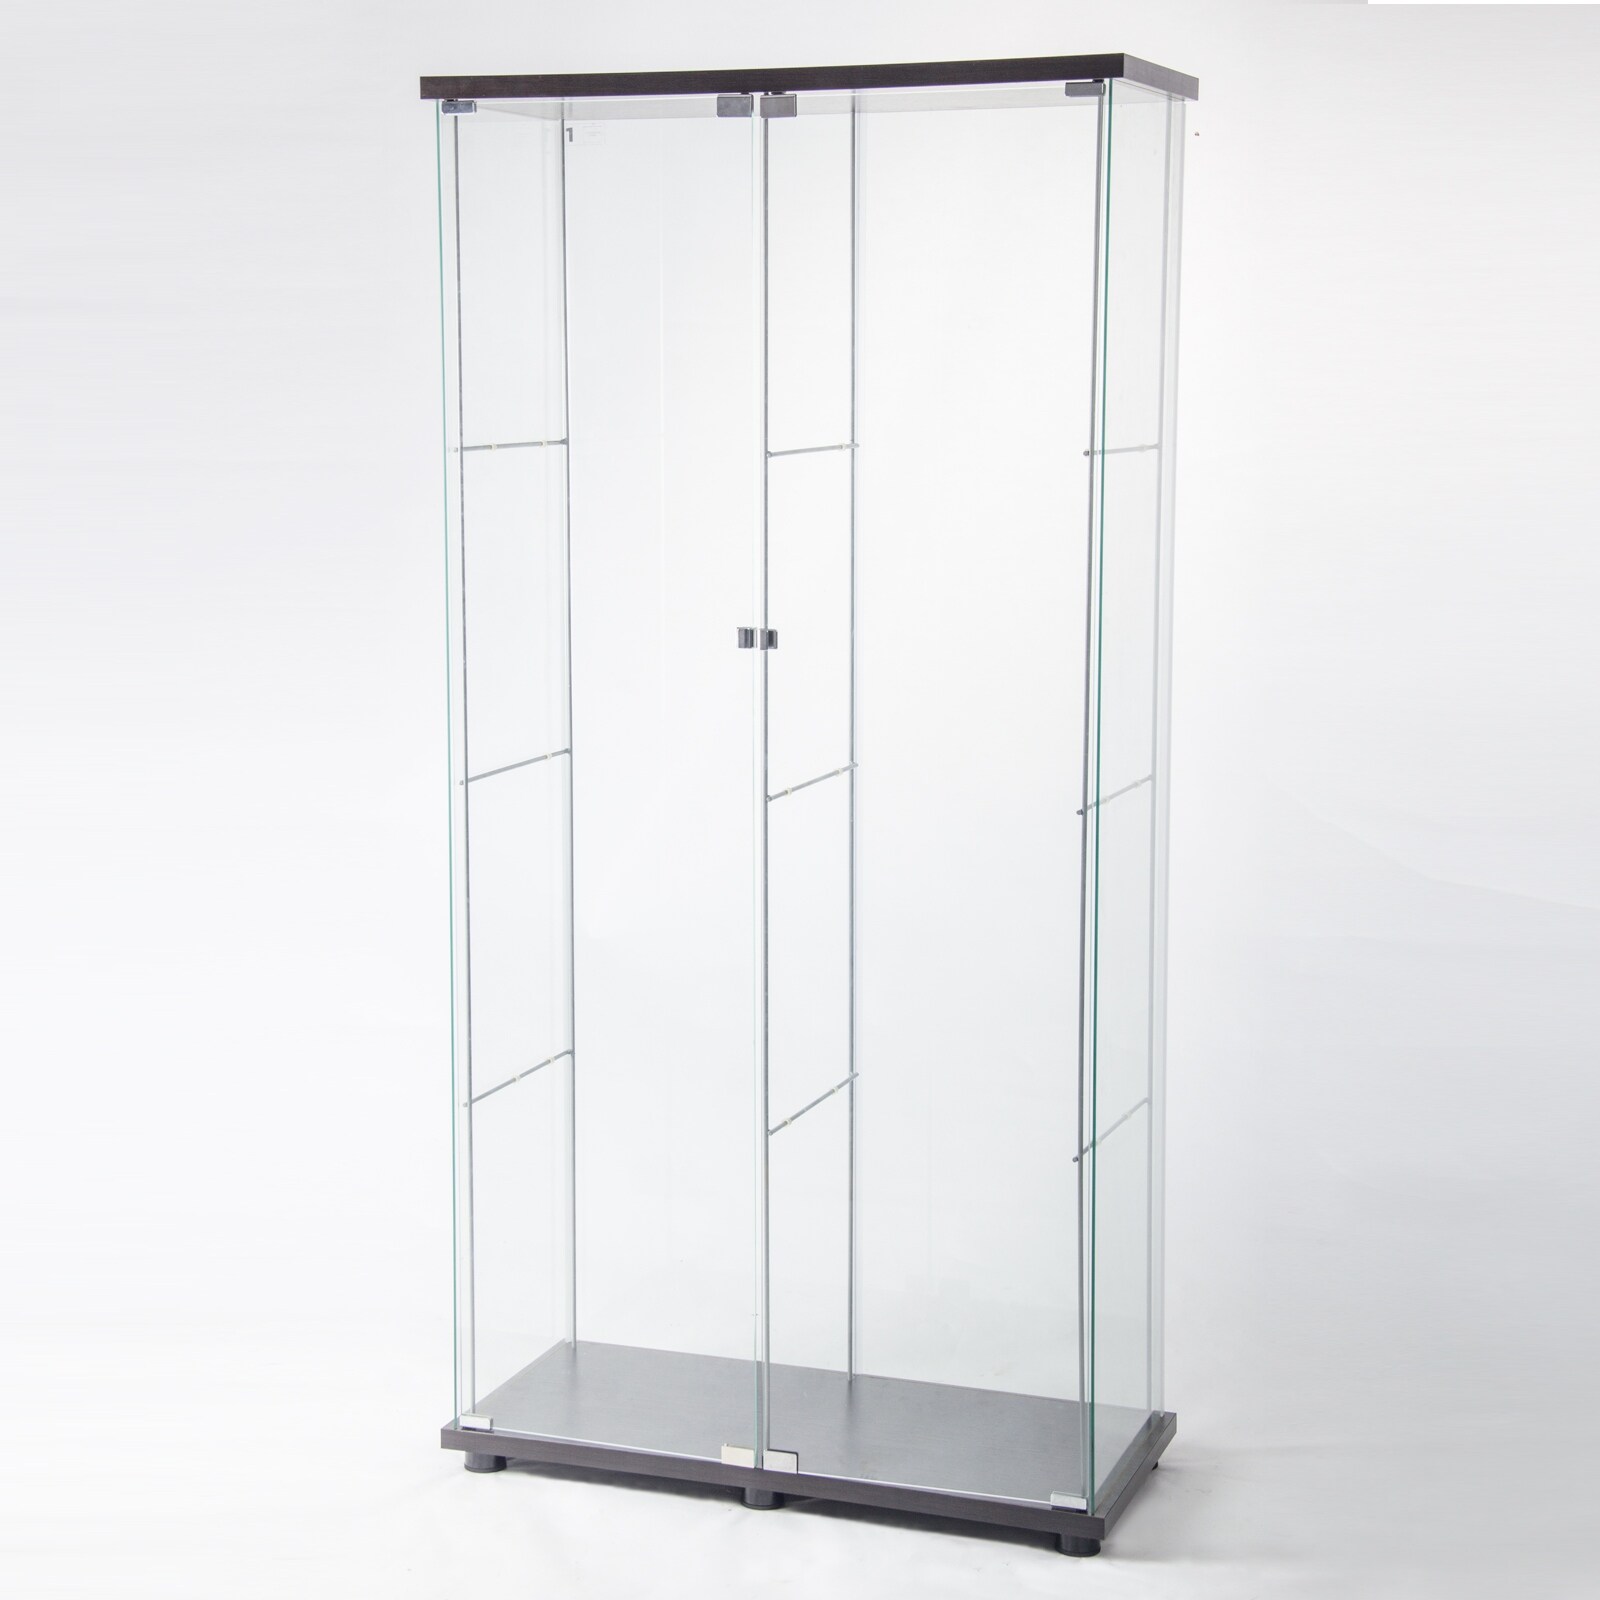 Glass Cabinet-b Glass Display Cabinet 4 Shelves with Door Black Floor Standing Curio Bookshelf in The Study for Living Room Bedroom Office 64” x 17”x 14.5”